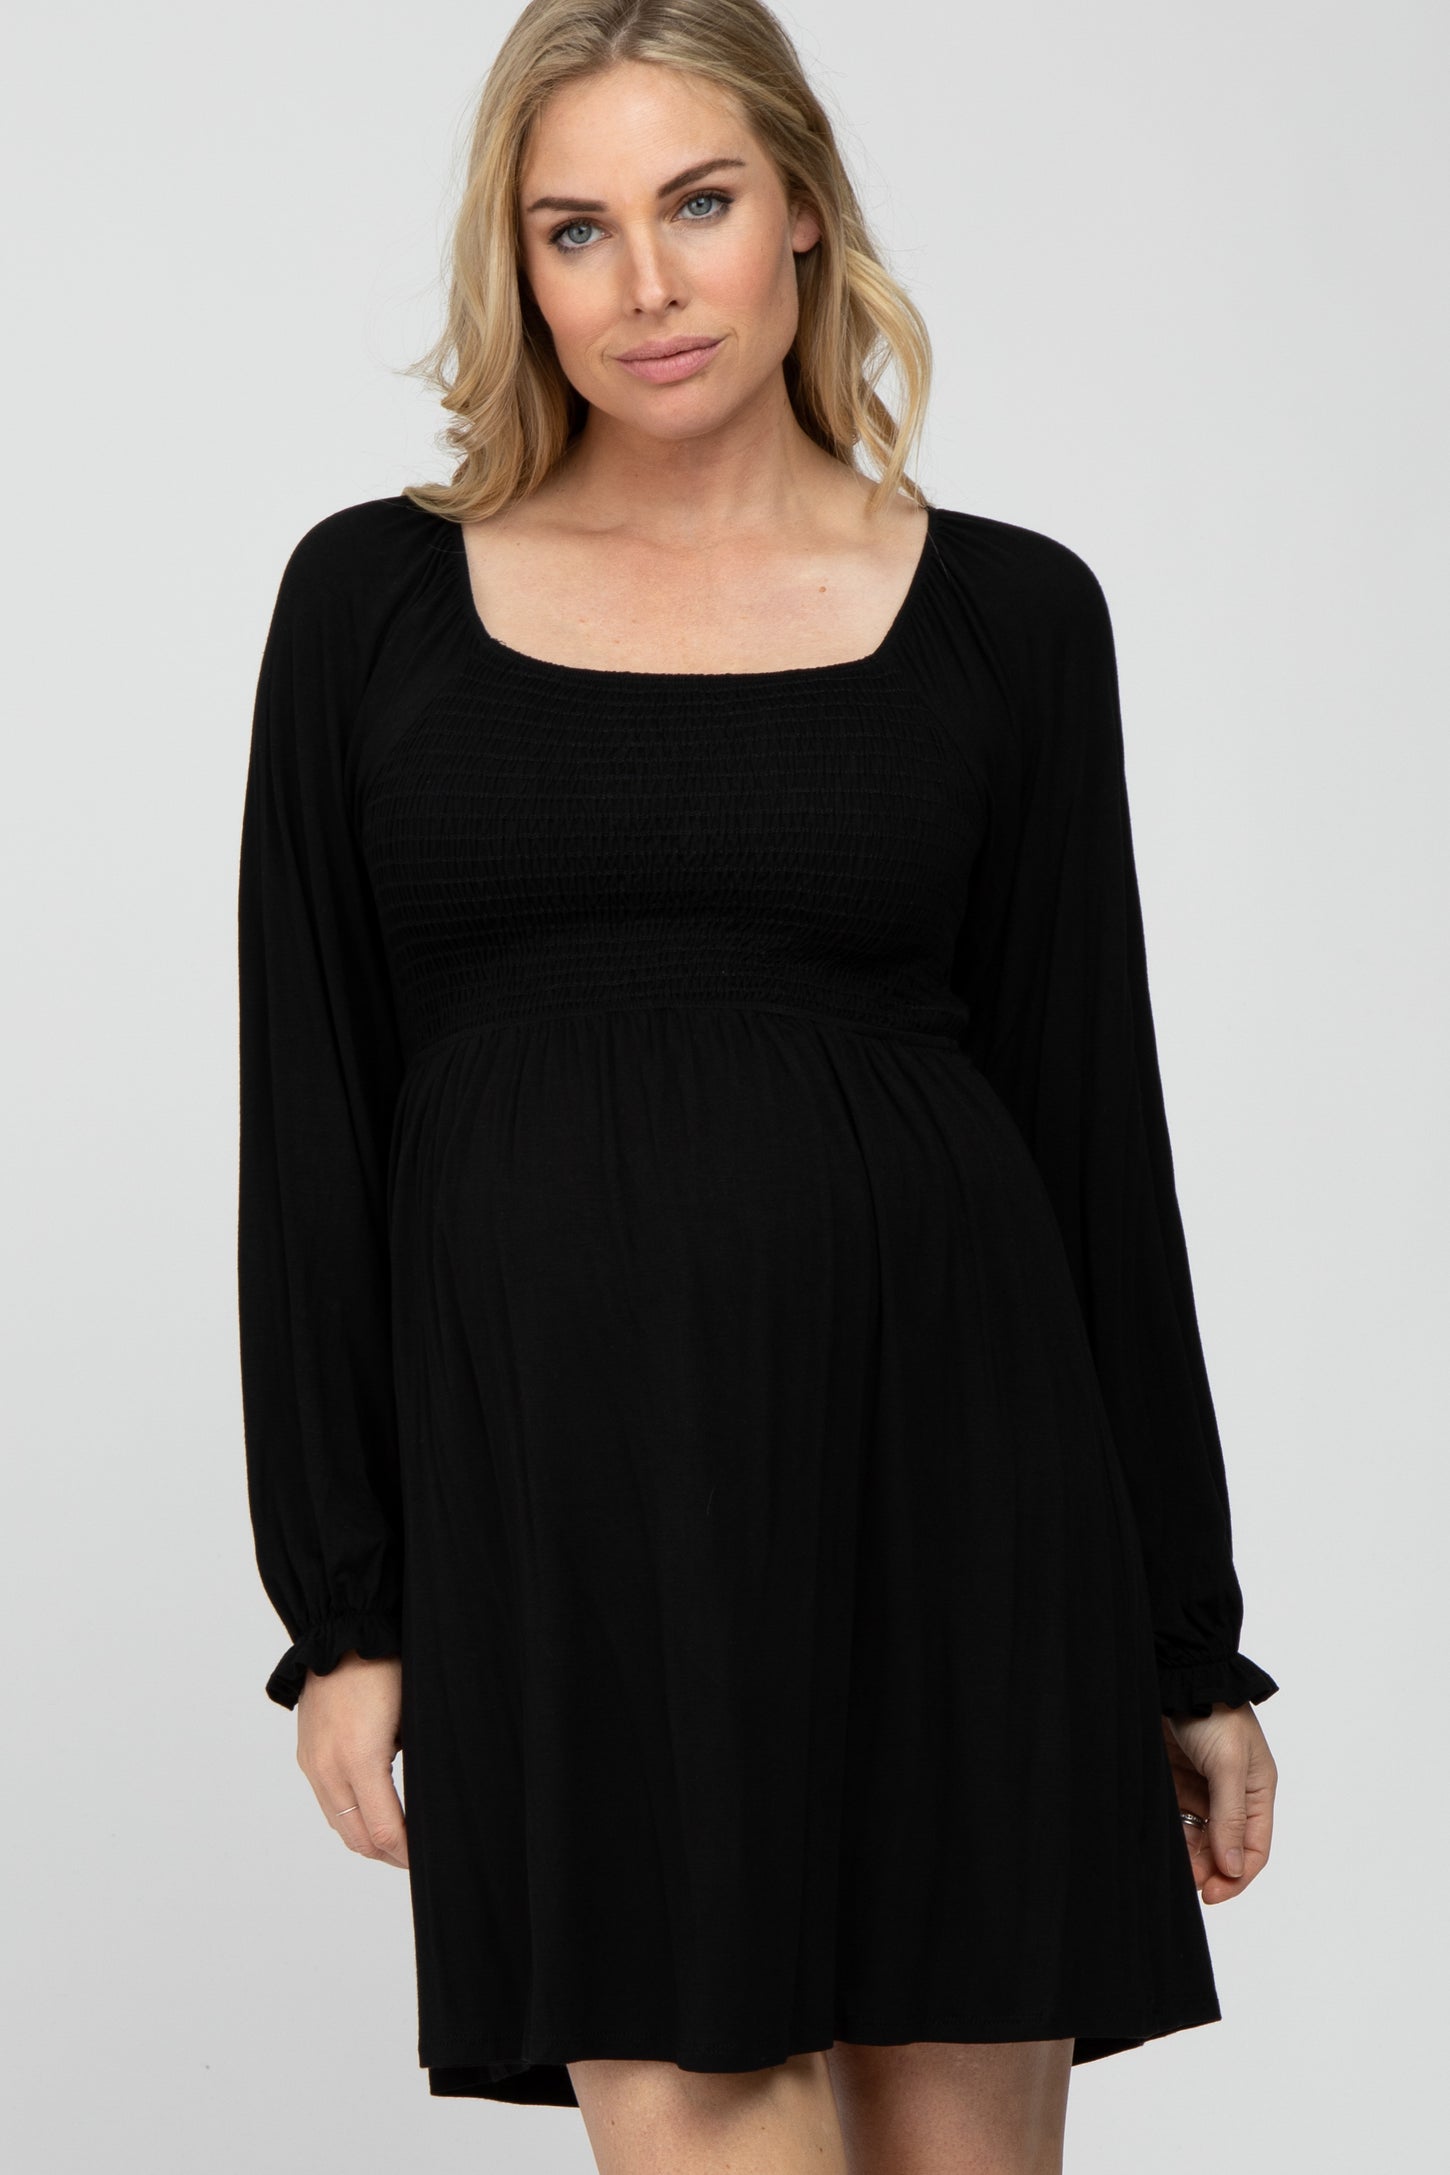 Black Smocked Front Babydoll Maternity Dress